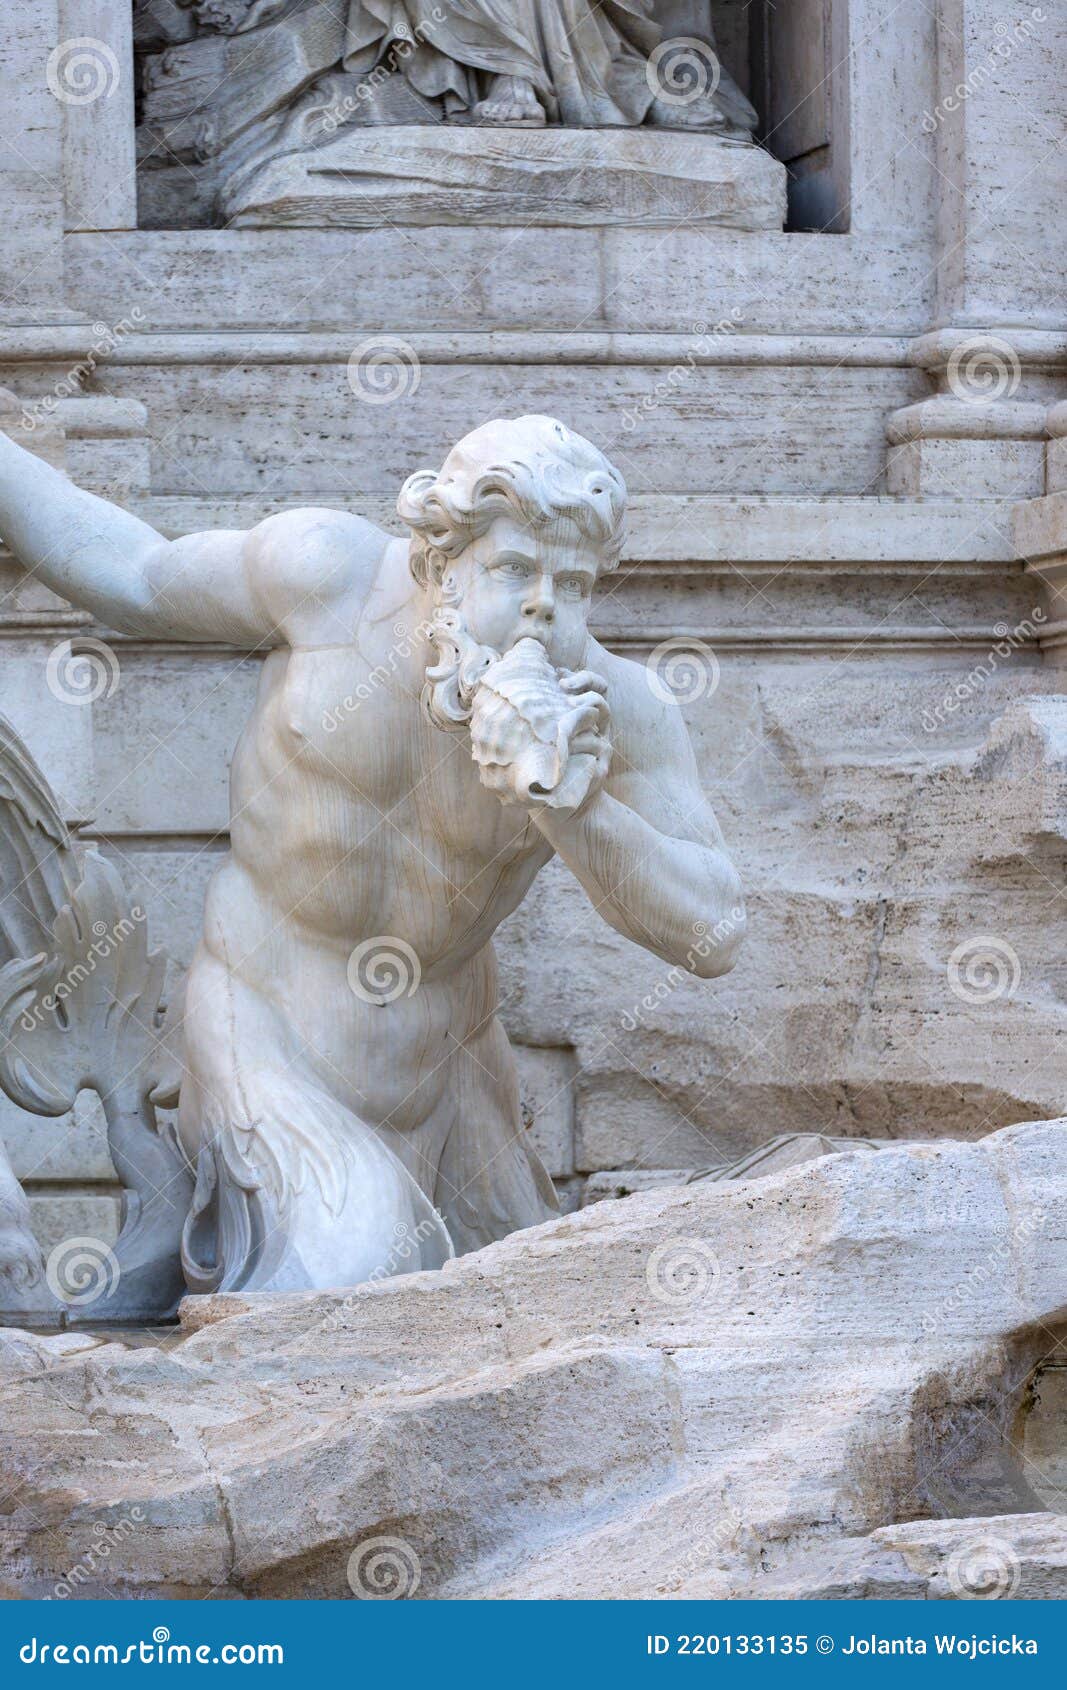 18th century trevi fountain, character of triton, rome, italy